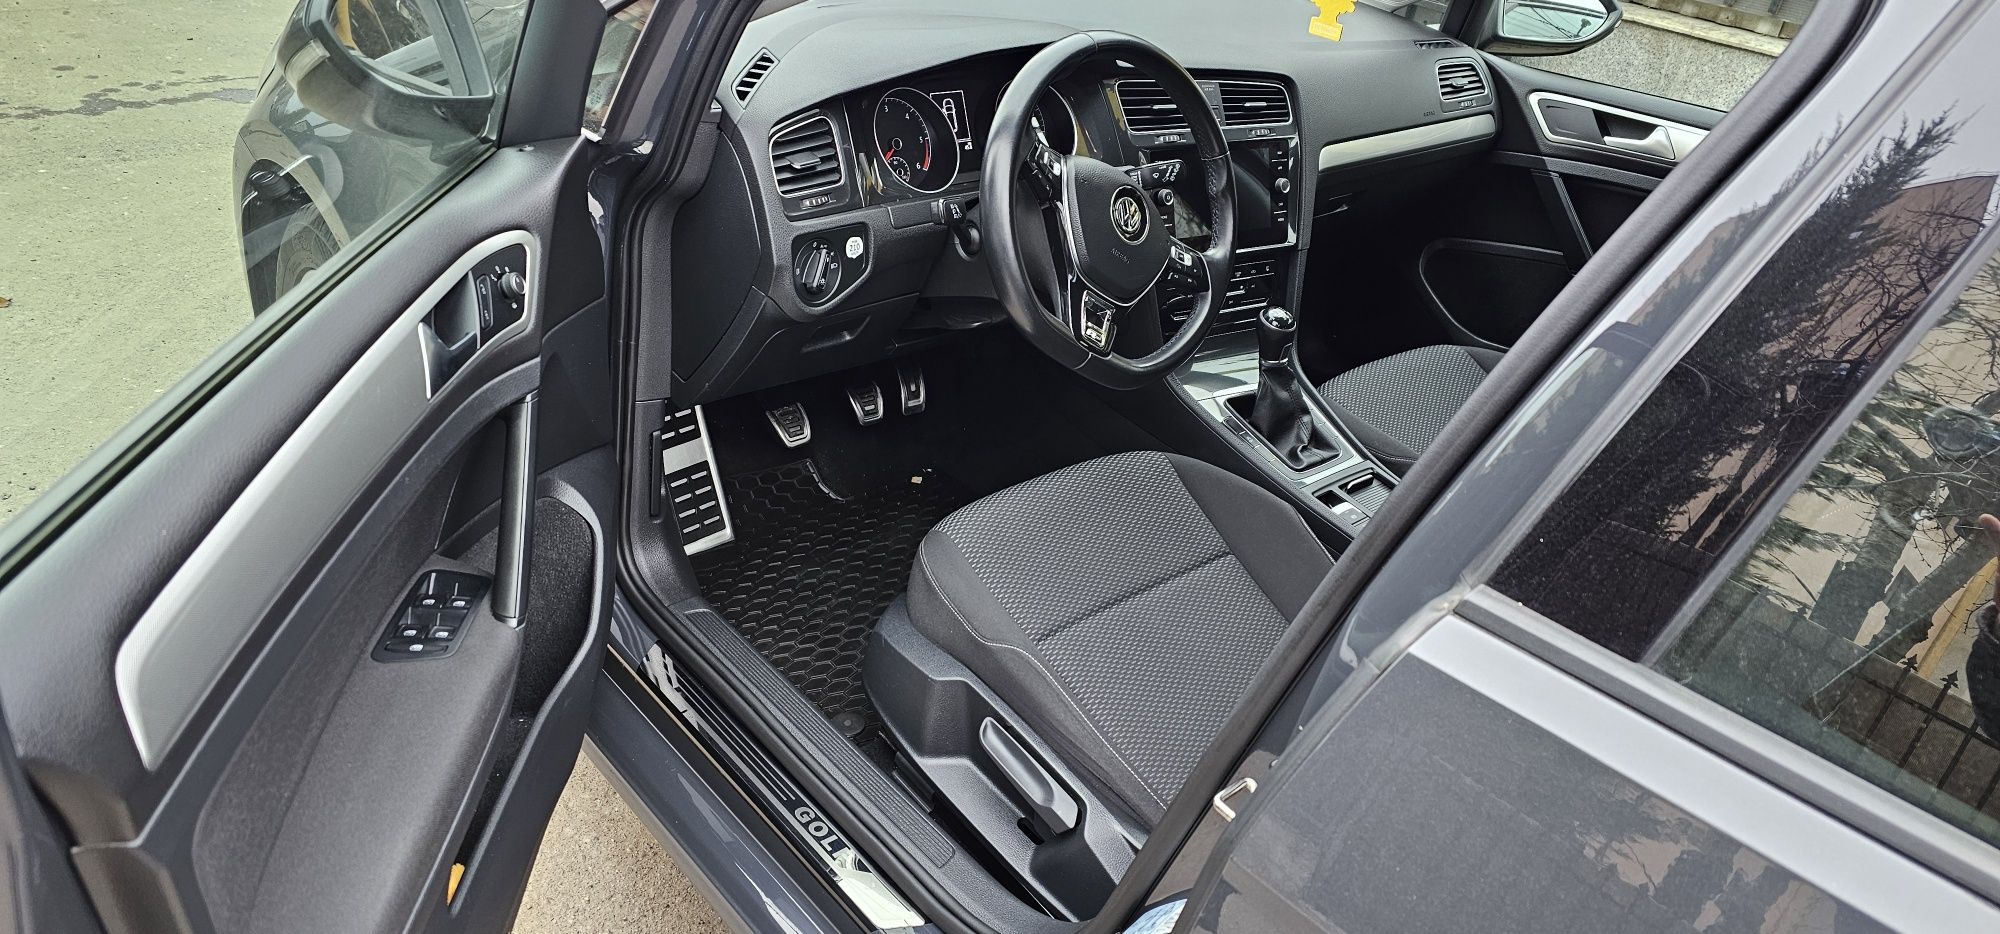 VW Golf 7,5 comfortline. 1,6tdi-116cp,E6,xenon, full led,BMT,2019